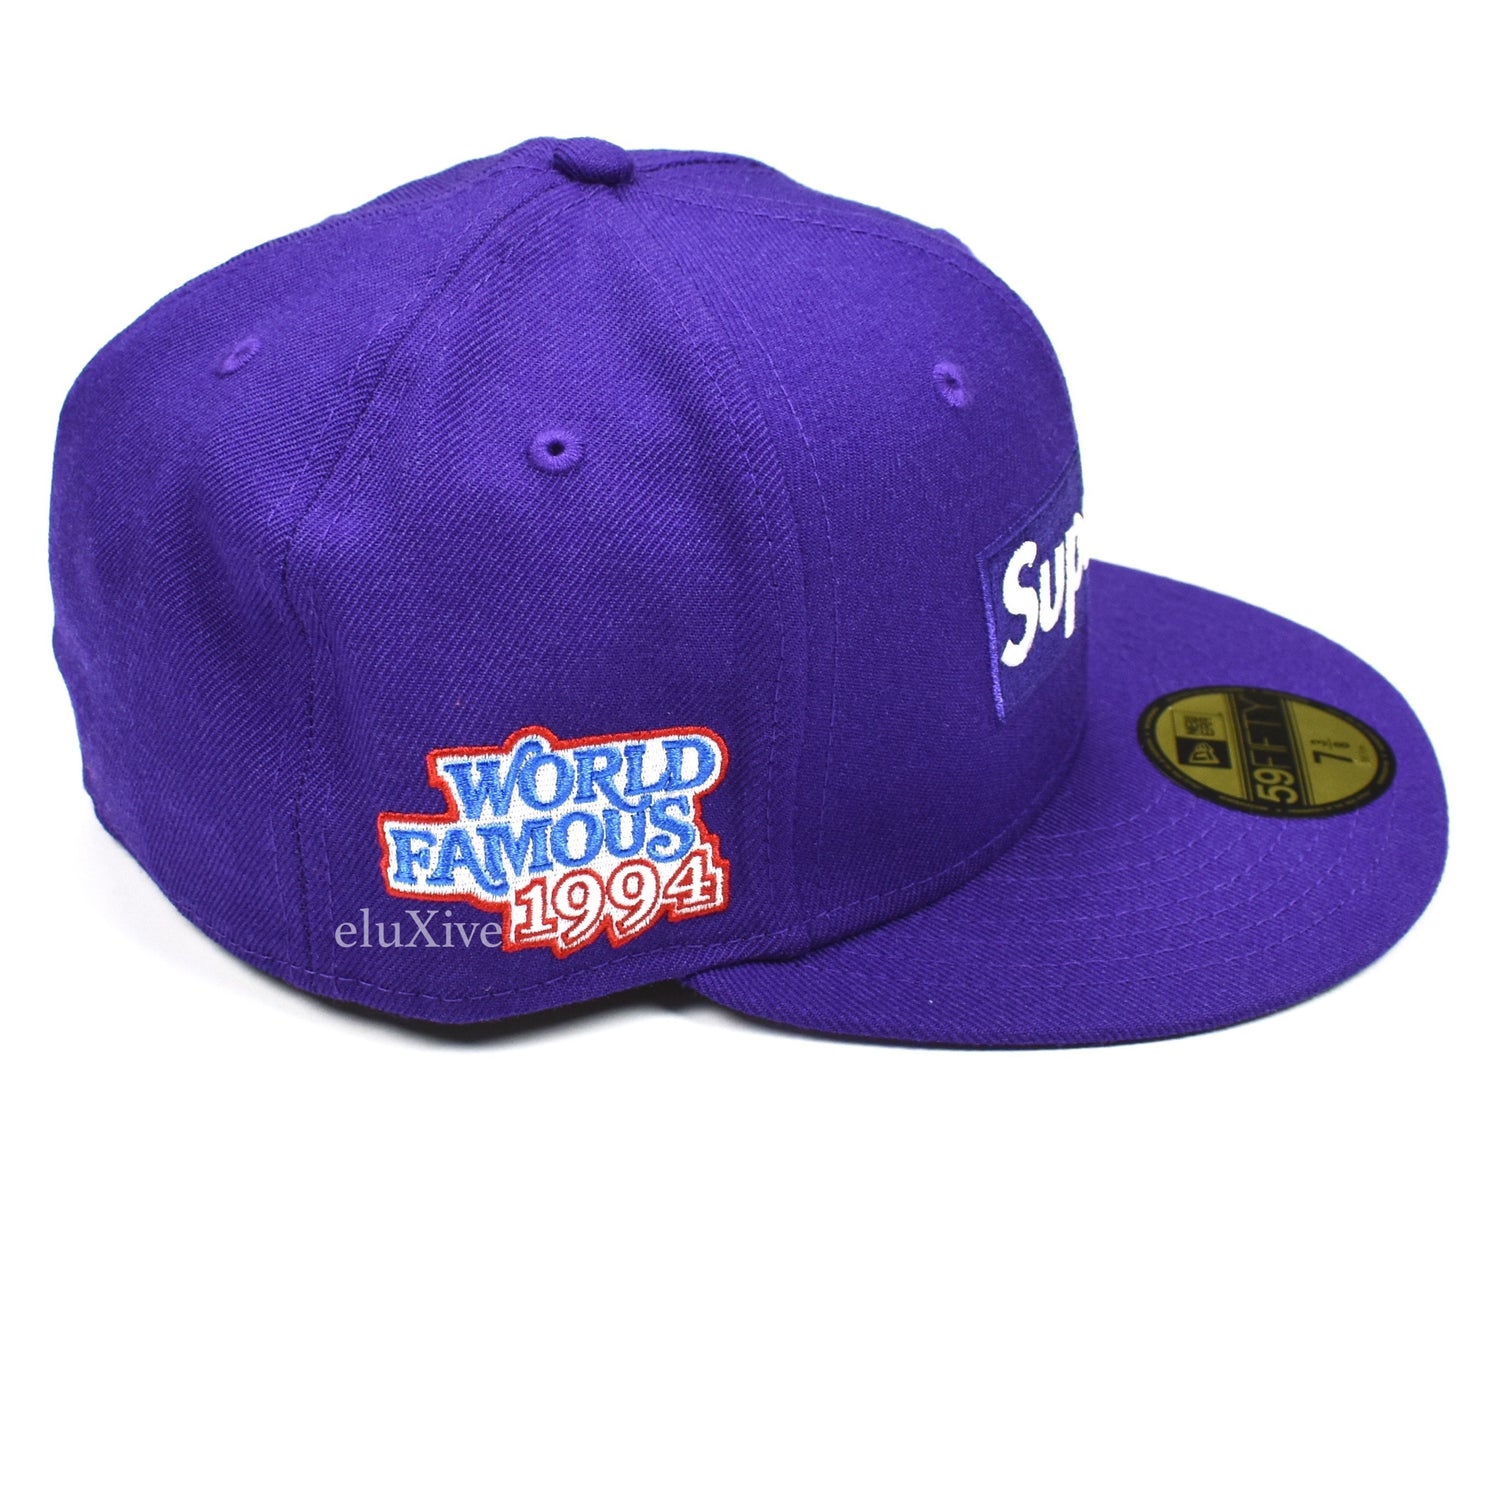 Supreme x New Era - World Famous Box Logo Fitted Hat (Purple